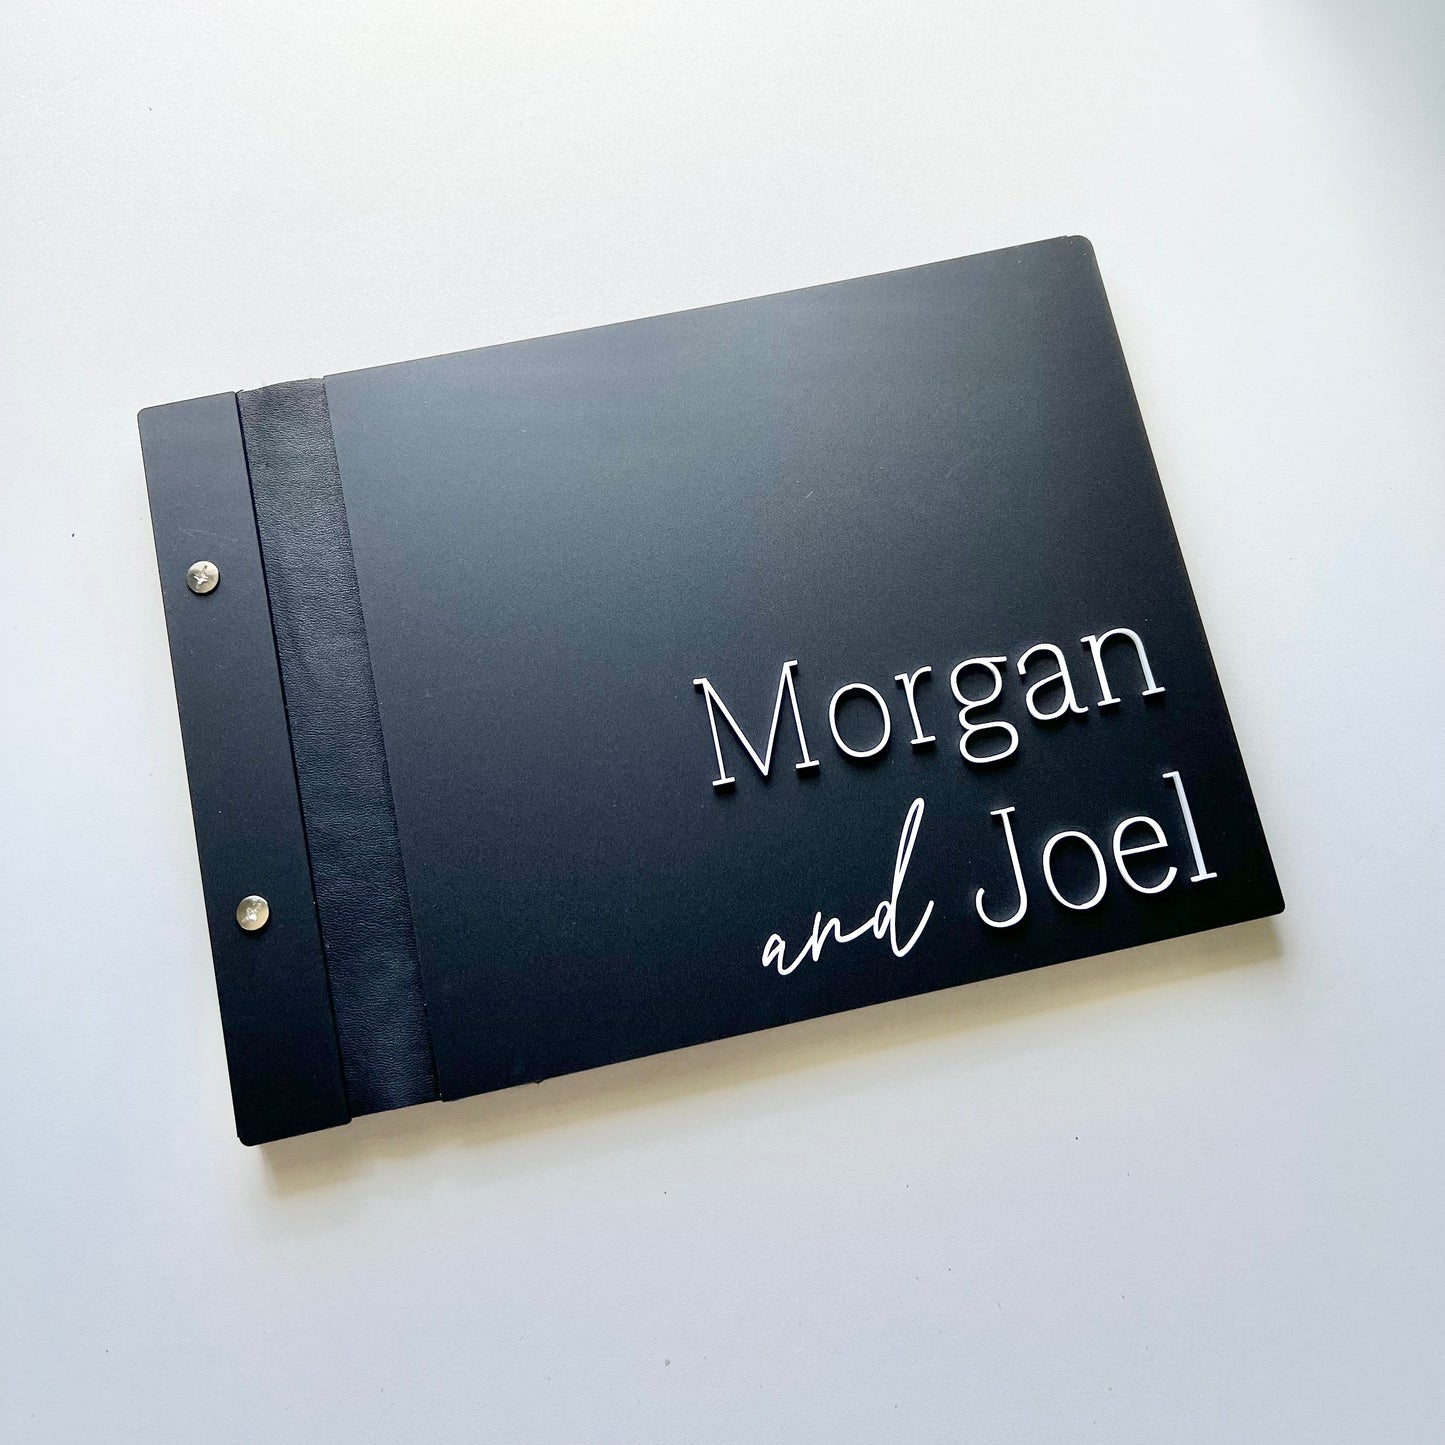 The Morgan guest book in acrylic